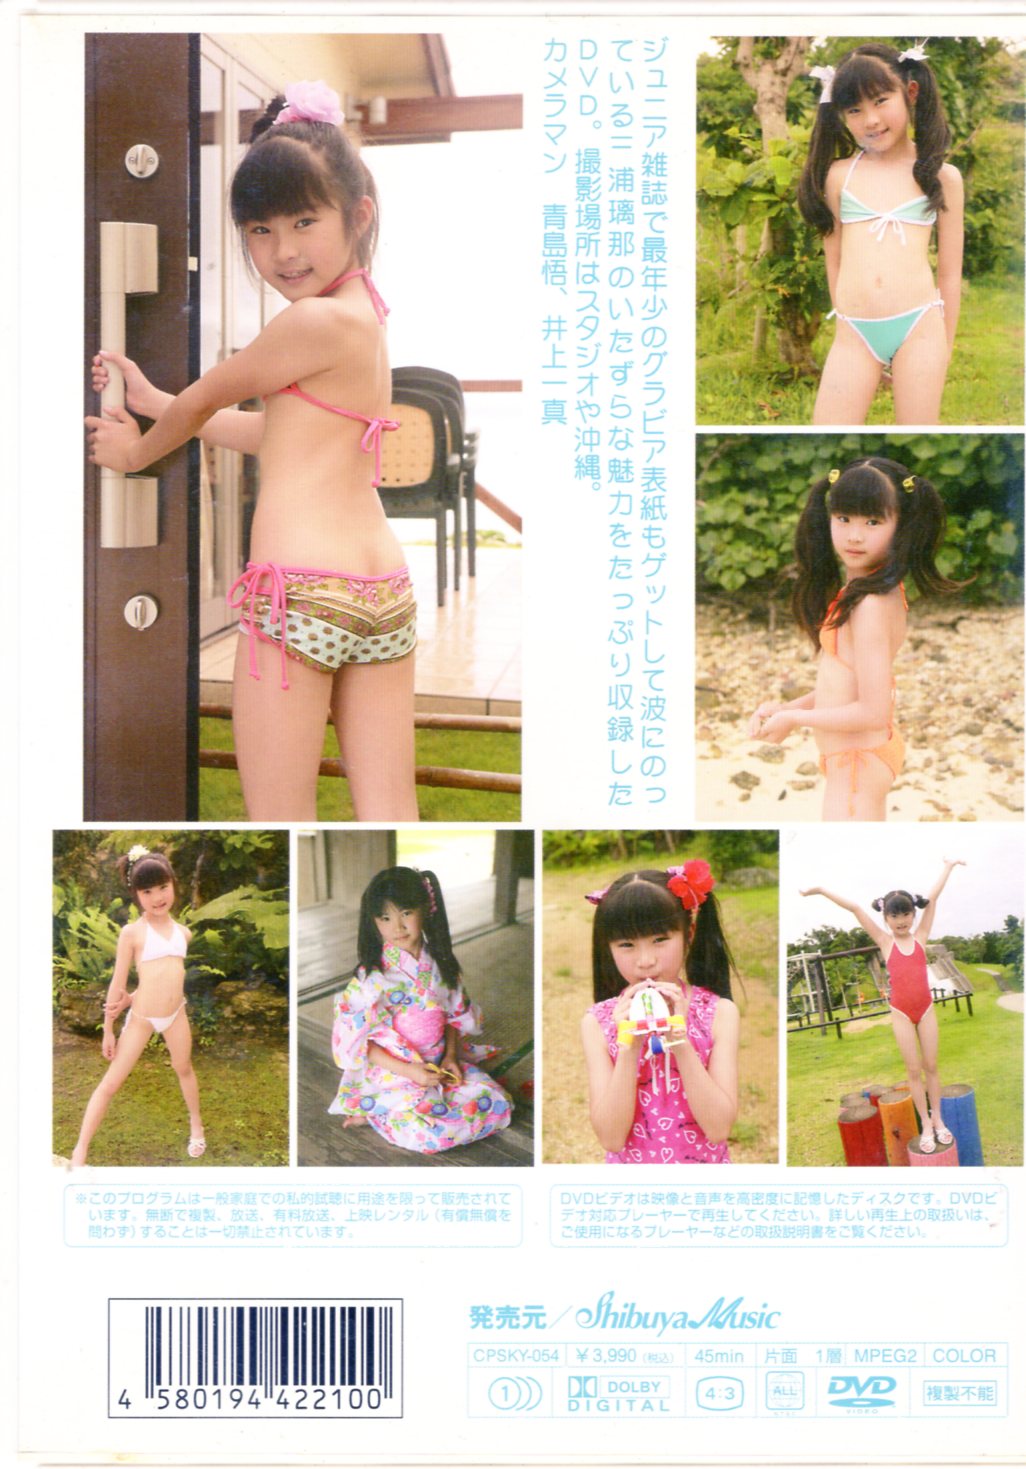 Shibuya Music DVD Rina Miura Rina Miura Make a wish upon the 8